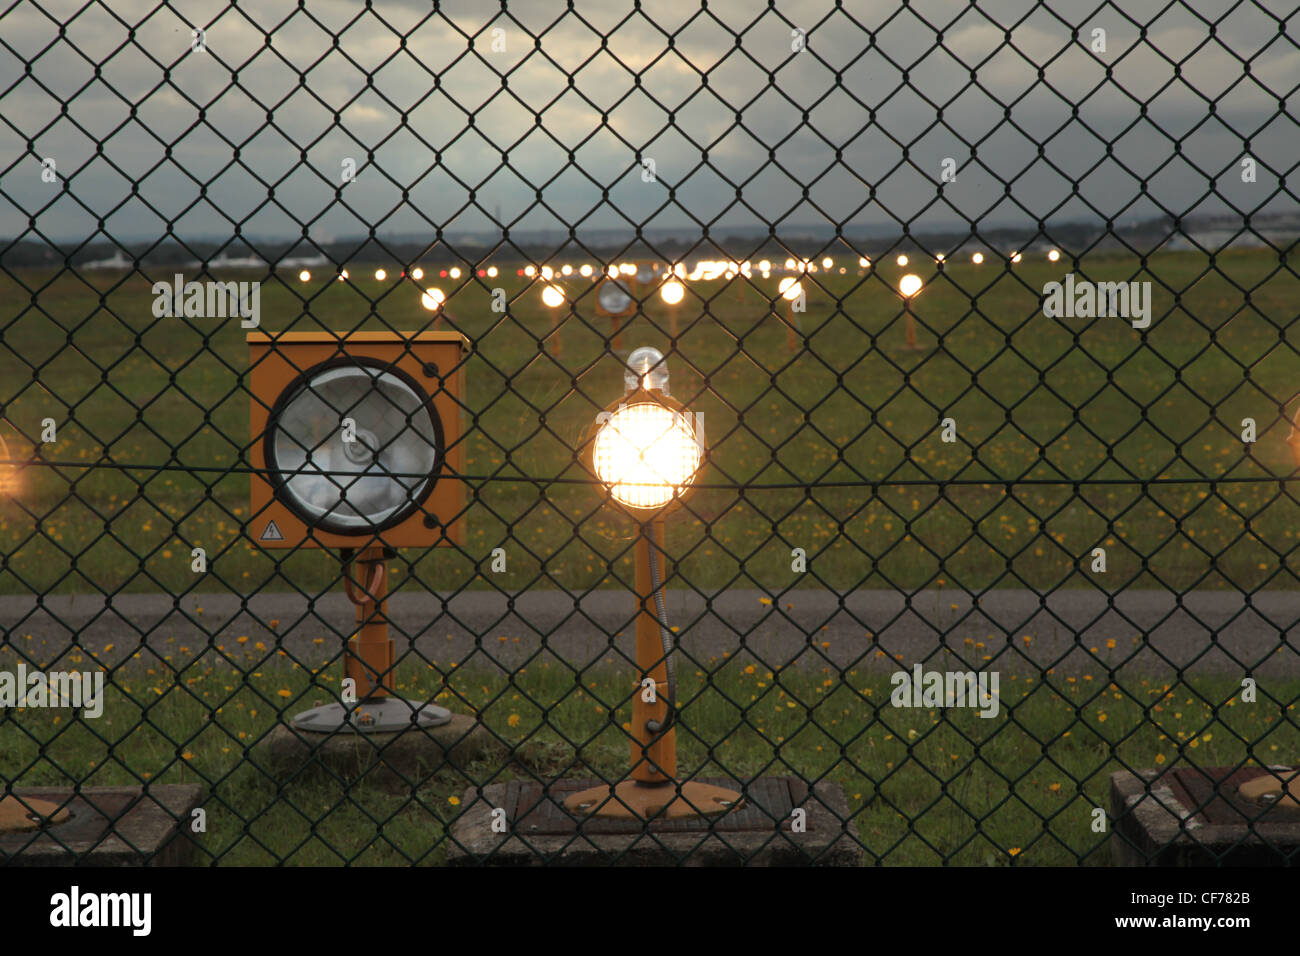 Landebahn am Flughafen mit Befeuerung, Airport Lighting, Airport Beacons Stock Photo